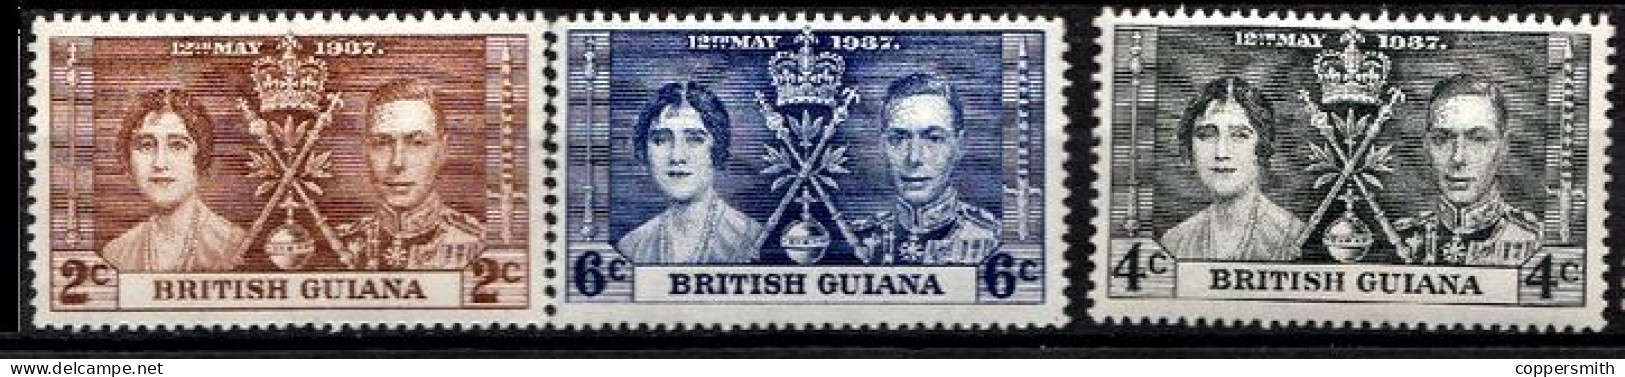 (018) Guyana / Guyane  Coronation / Krönung / 1937  ** / Mnh  Michel 173-175 - Guiana (1966-...)